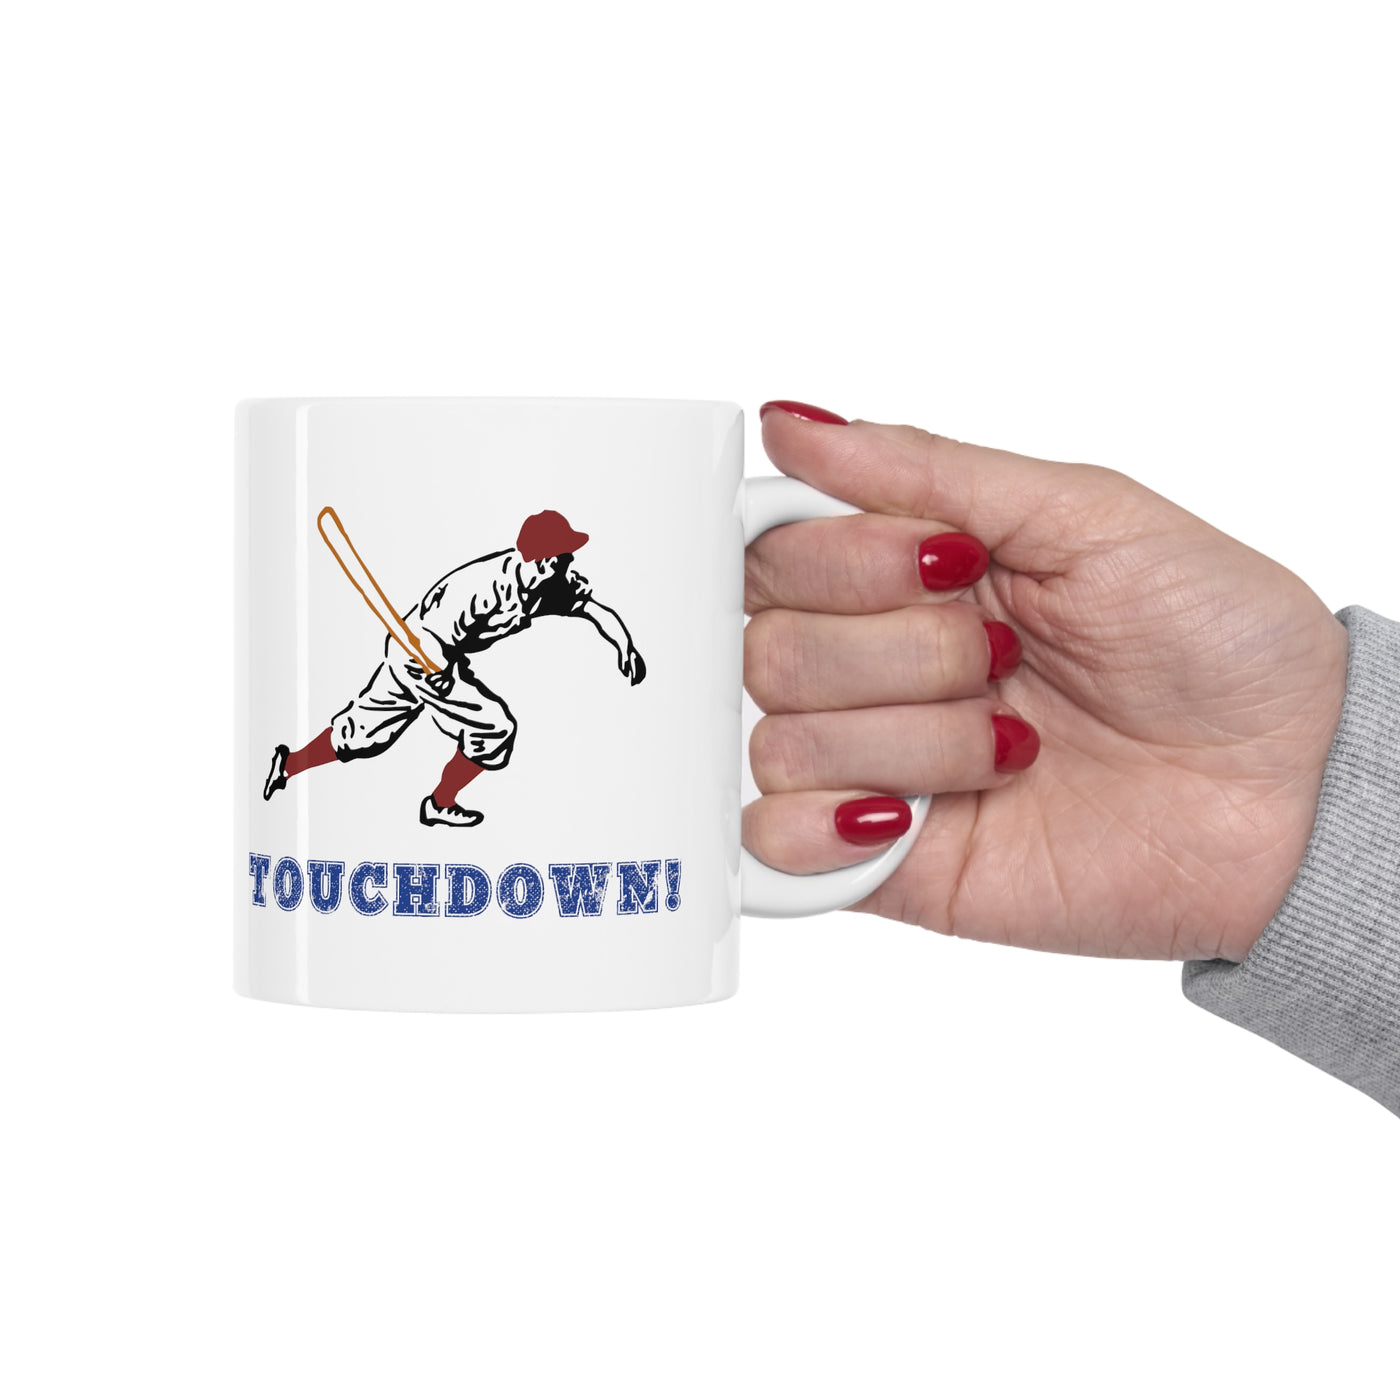 Touchdown! 11oz Ceramic Mug